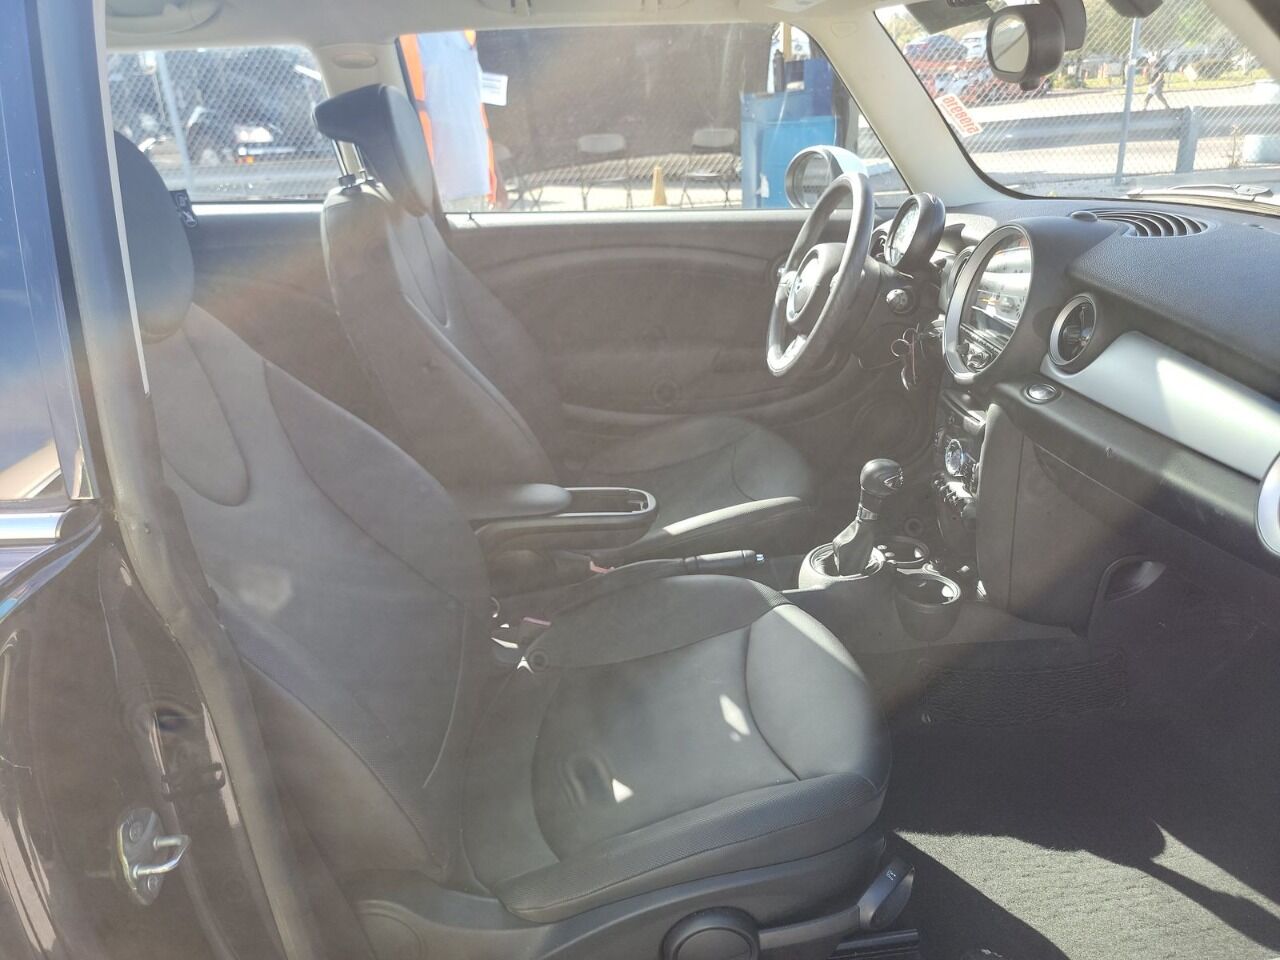 2013 MINI Hardtop Hatchback - $4,995